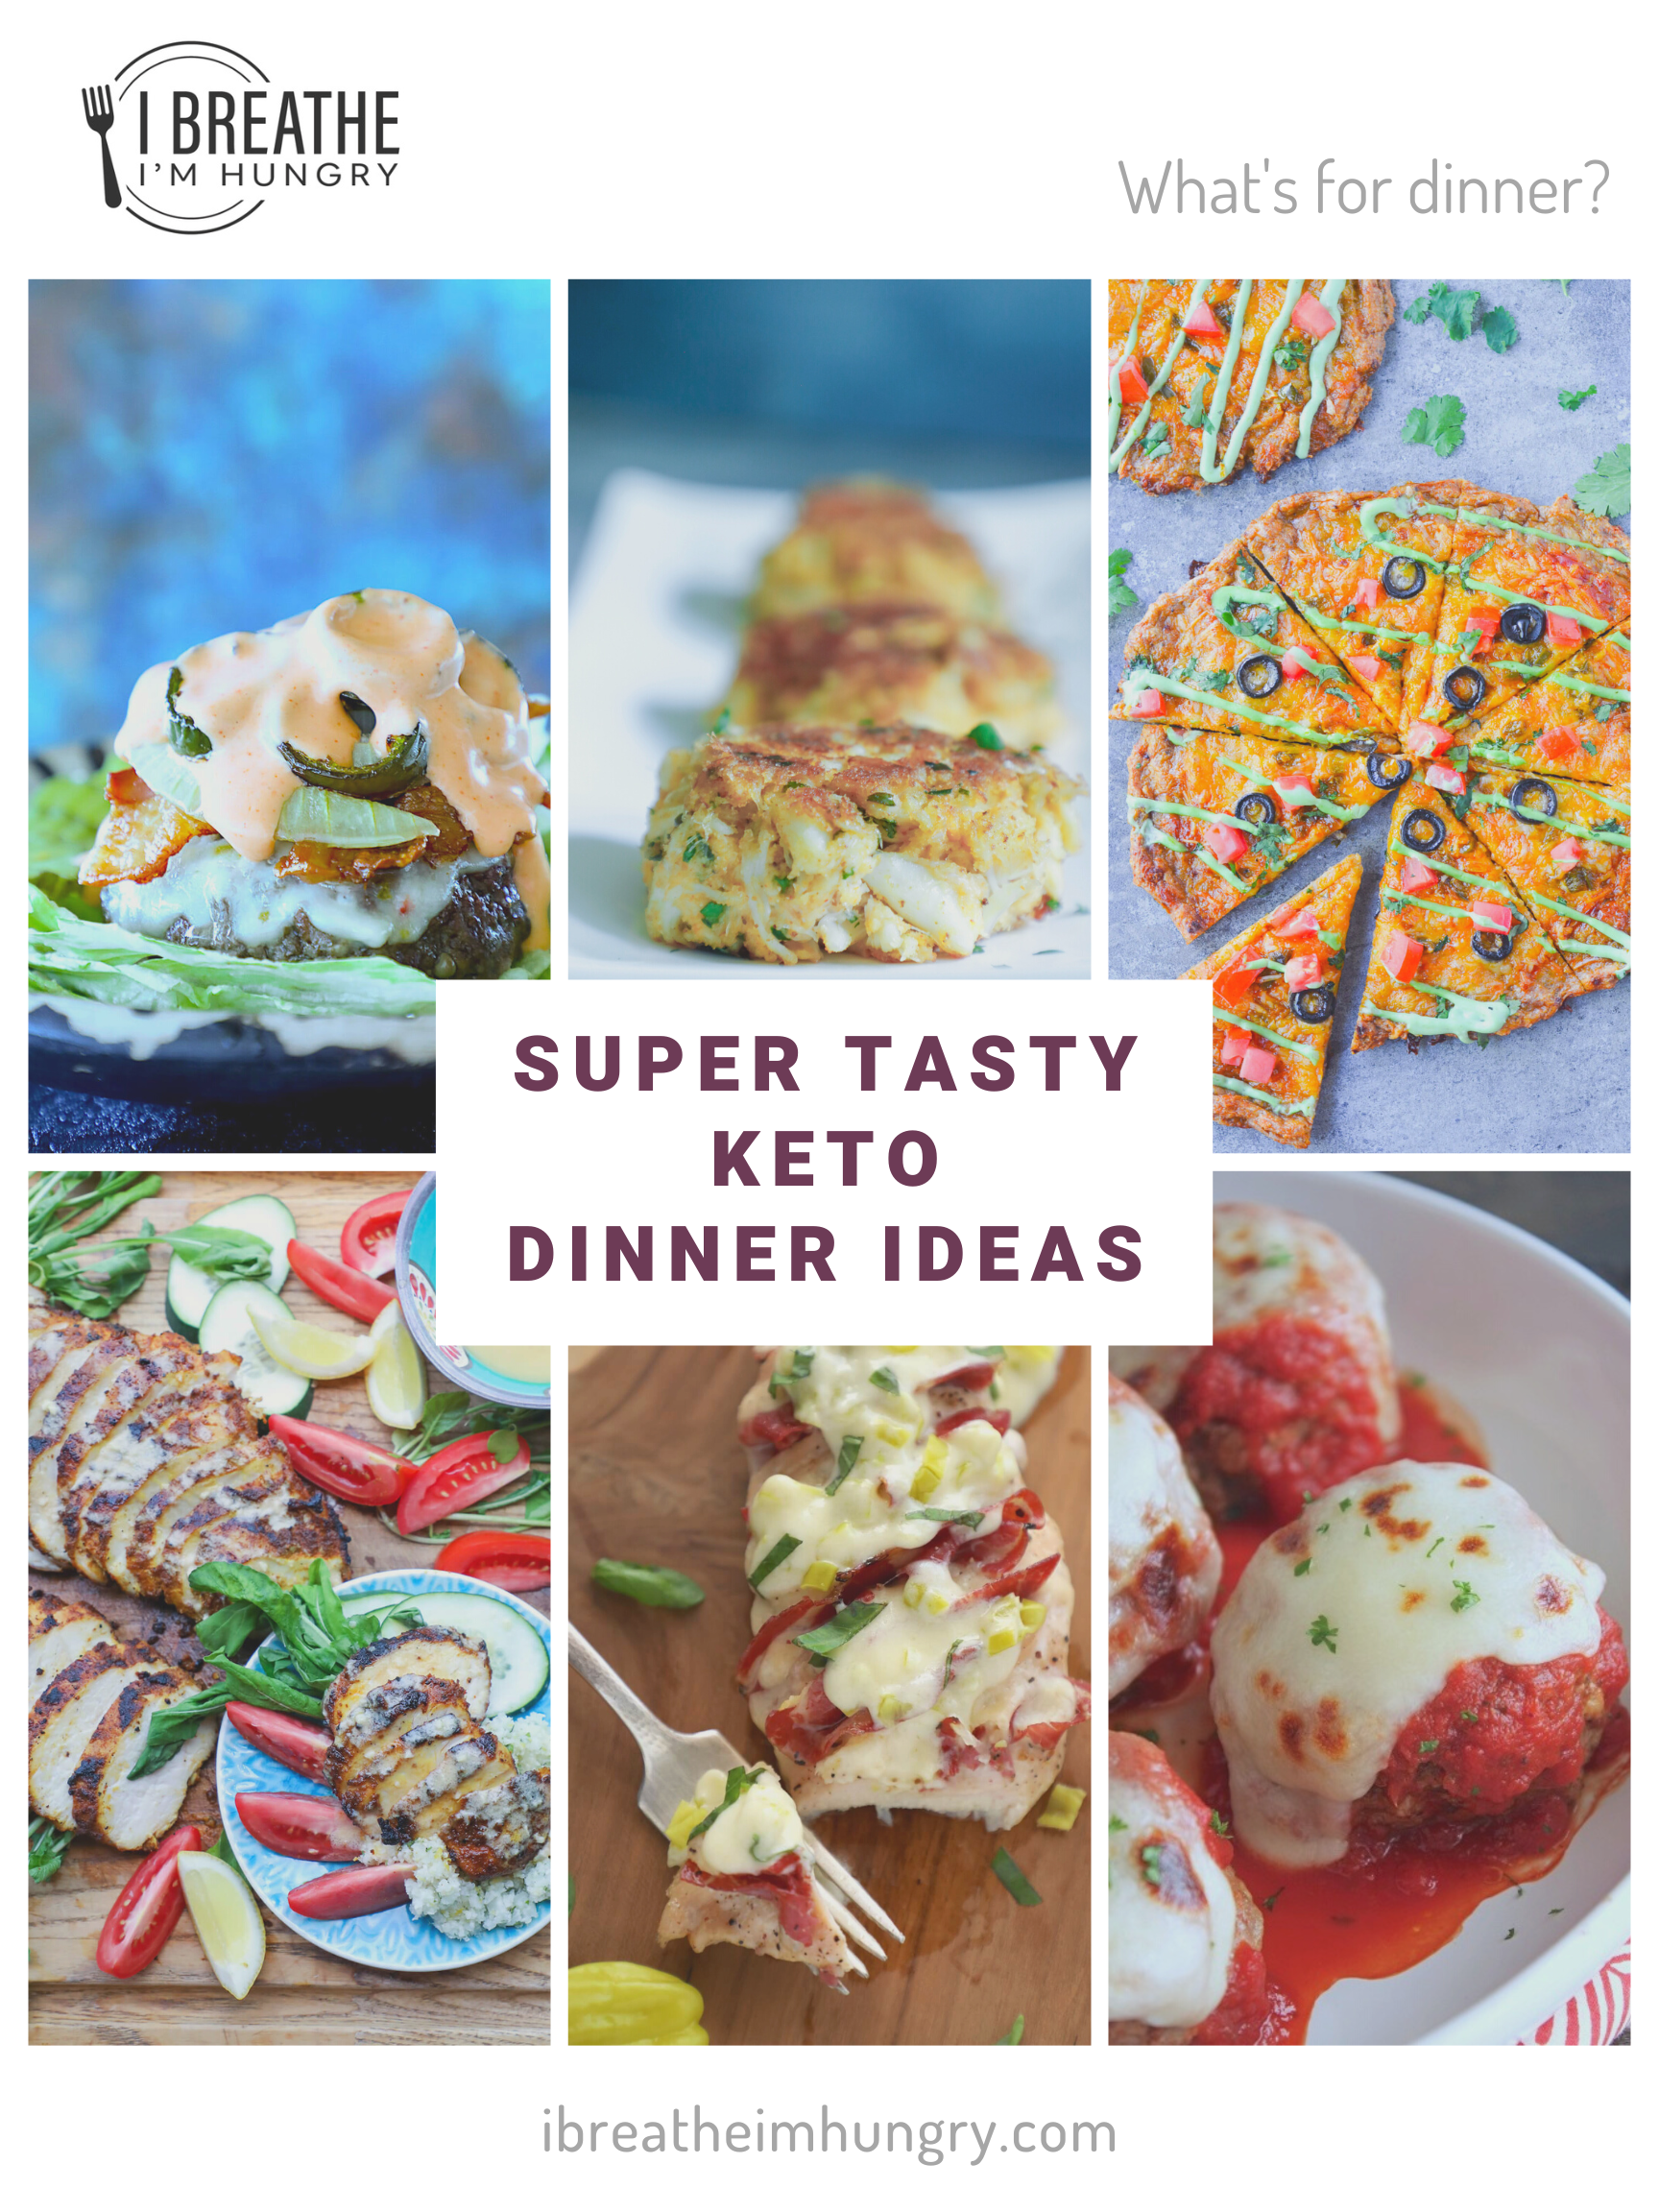 Keto Dinner Recipes - Low Carb Dinner Ideas photo grid